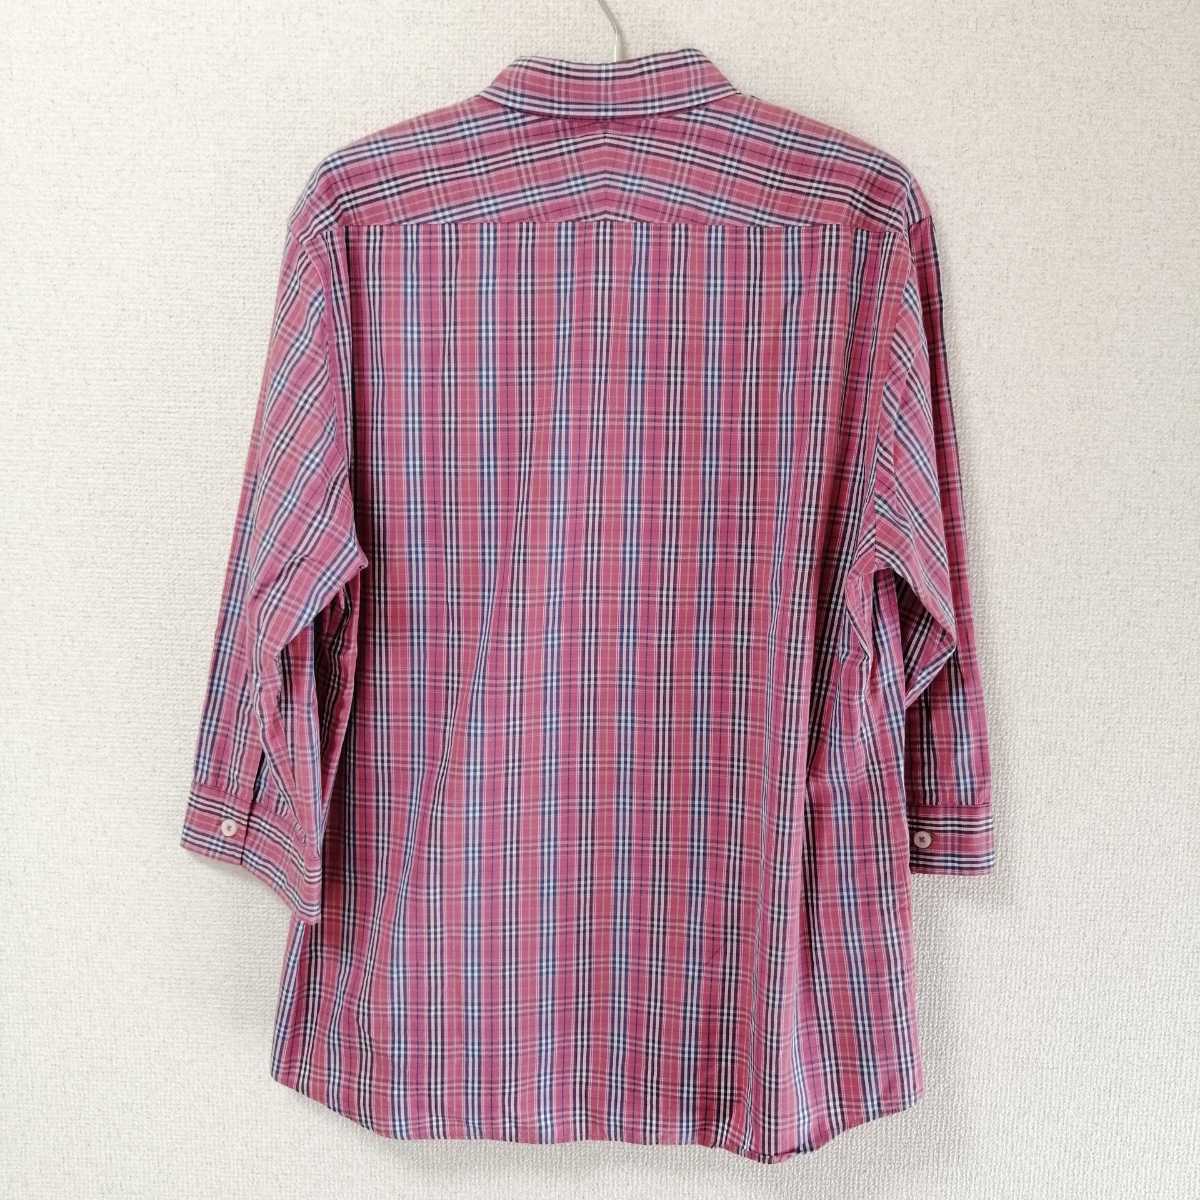 Burberry BLACK LABEL バーバリーブラックレーベル チェックシャツ 7分袖 3 ピンク